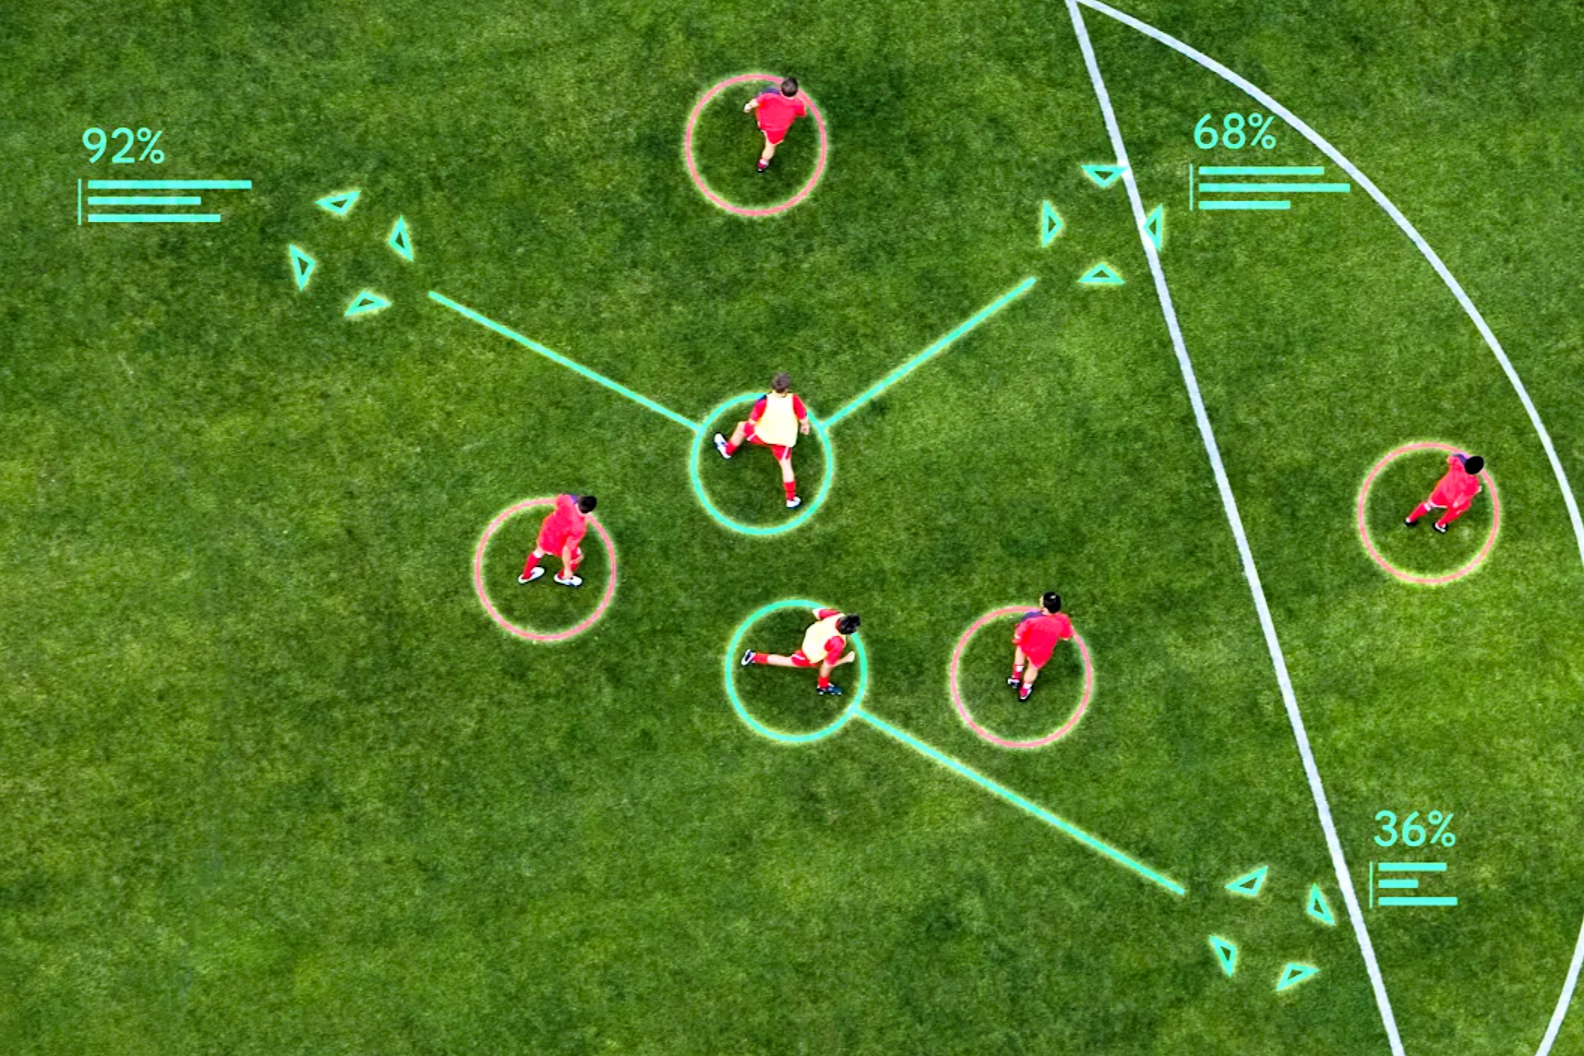 Google DeepMind’s TacticAI system has figured out football tactics